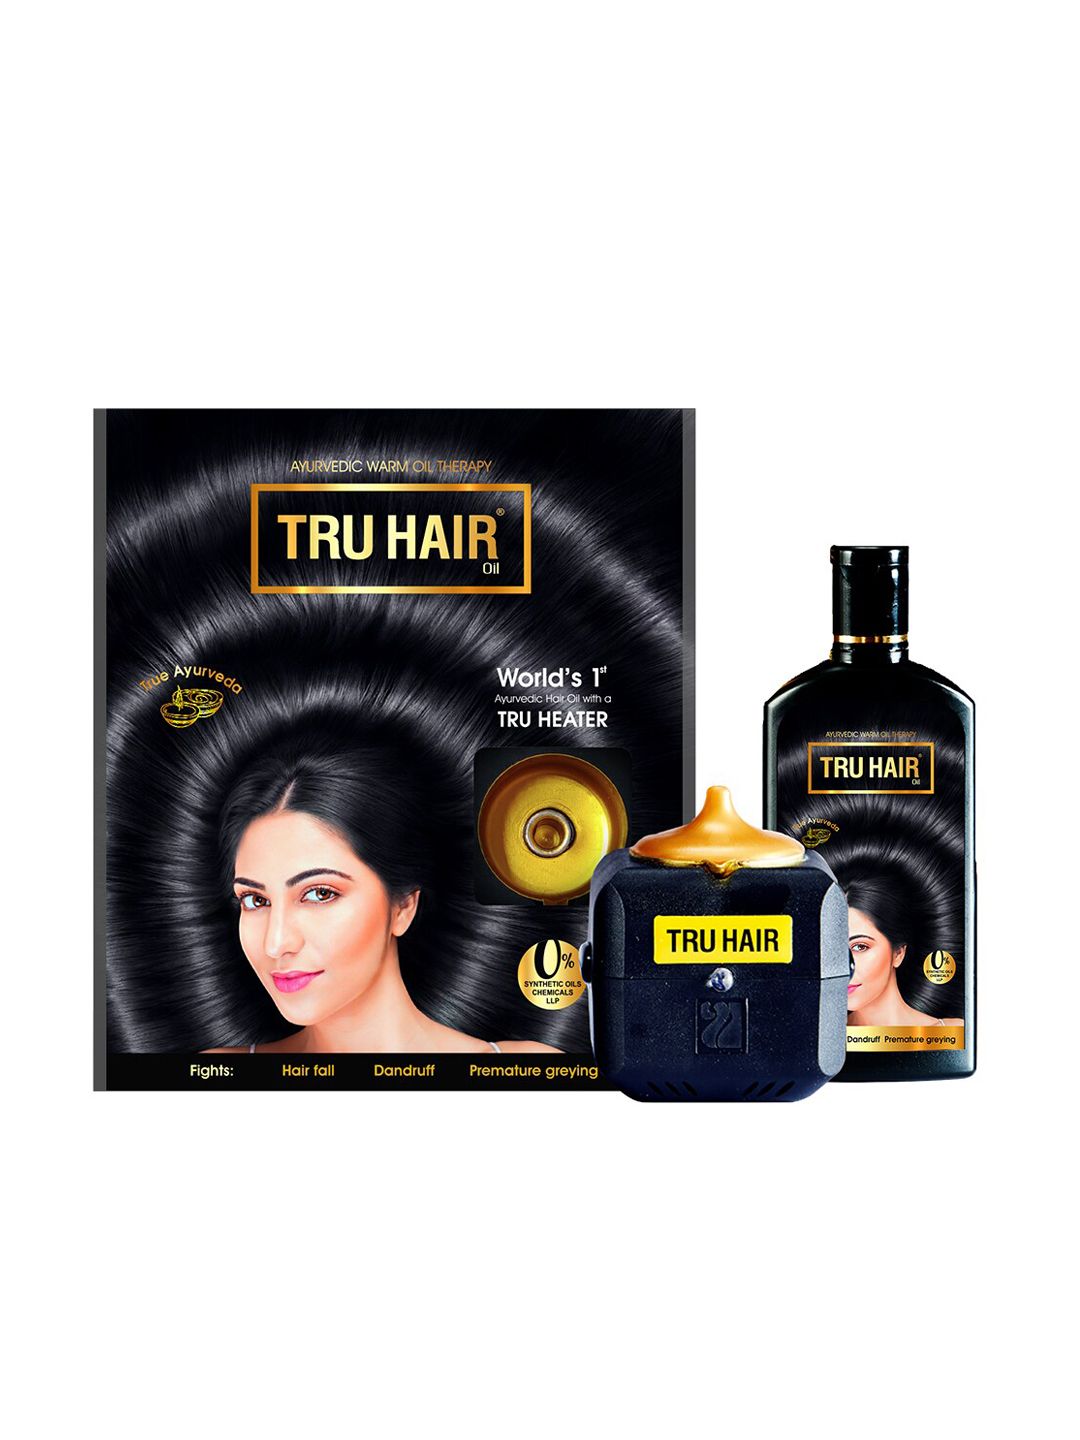 TRU HAIR Unisex Oil 110ml with TRU Heater Price in India